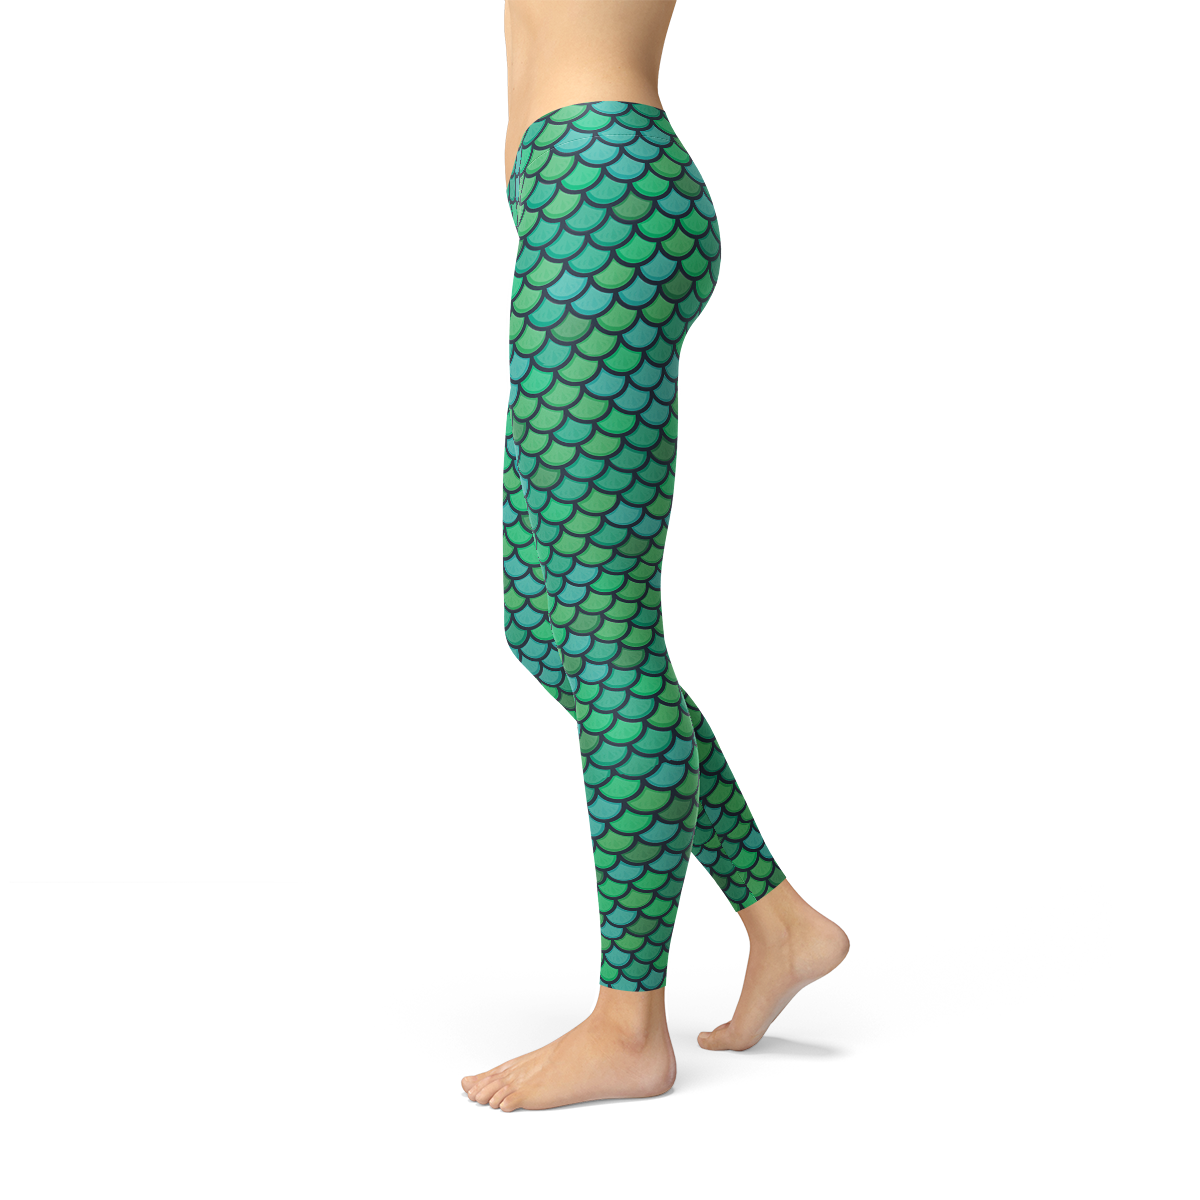 Green Mermaid Leggings Womens